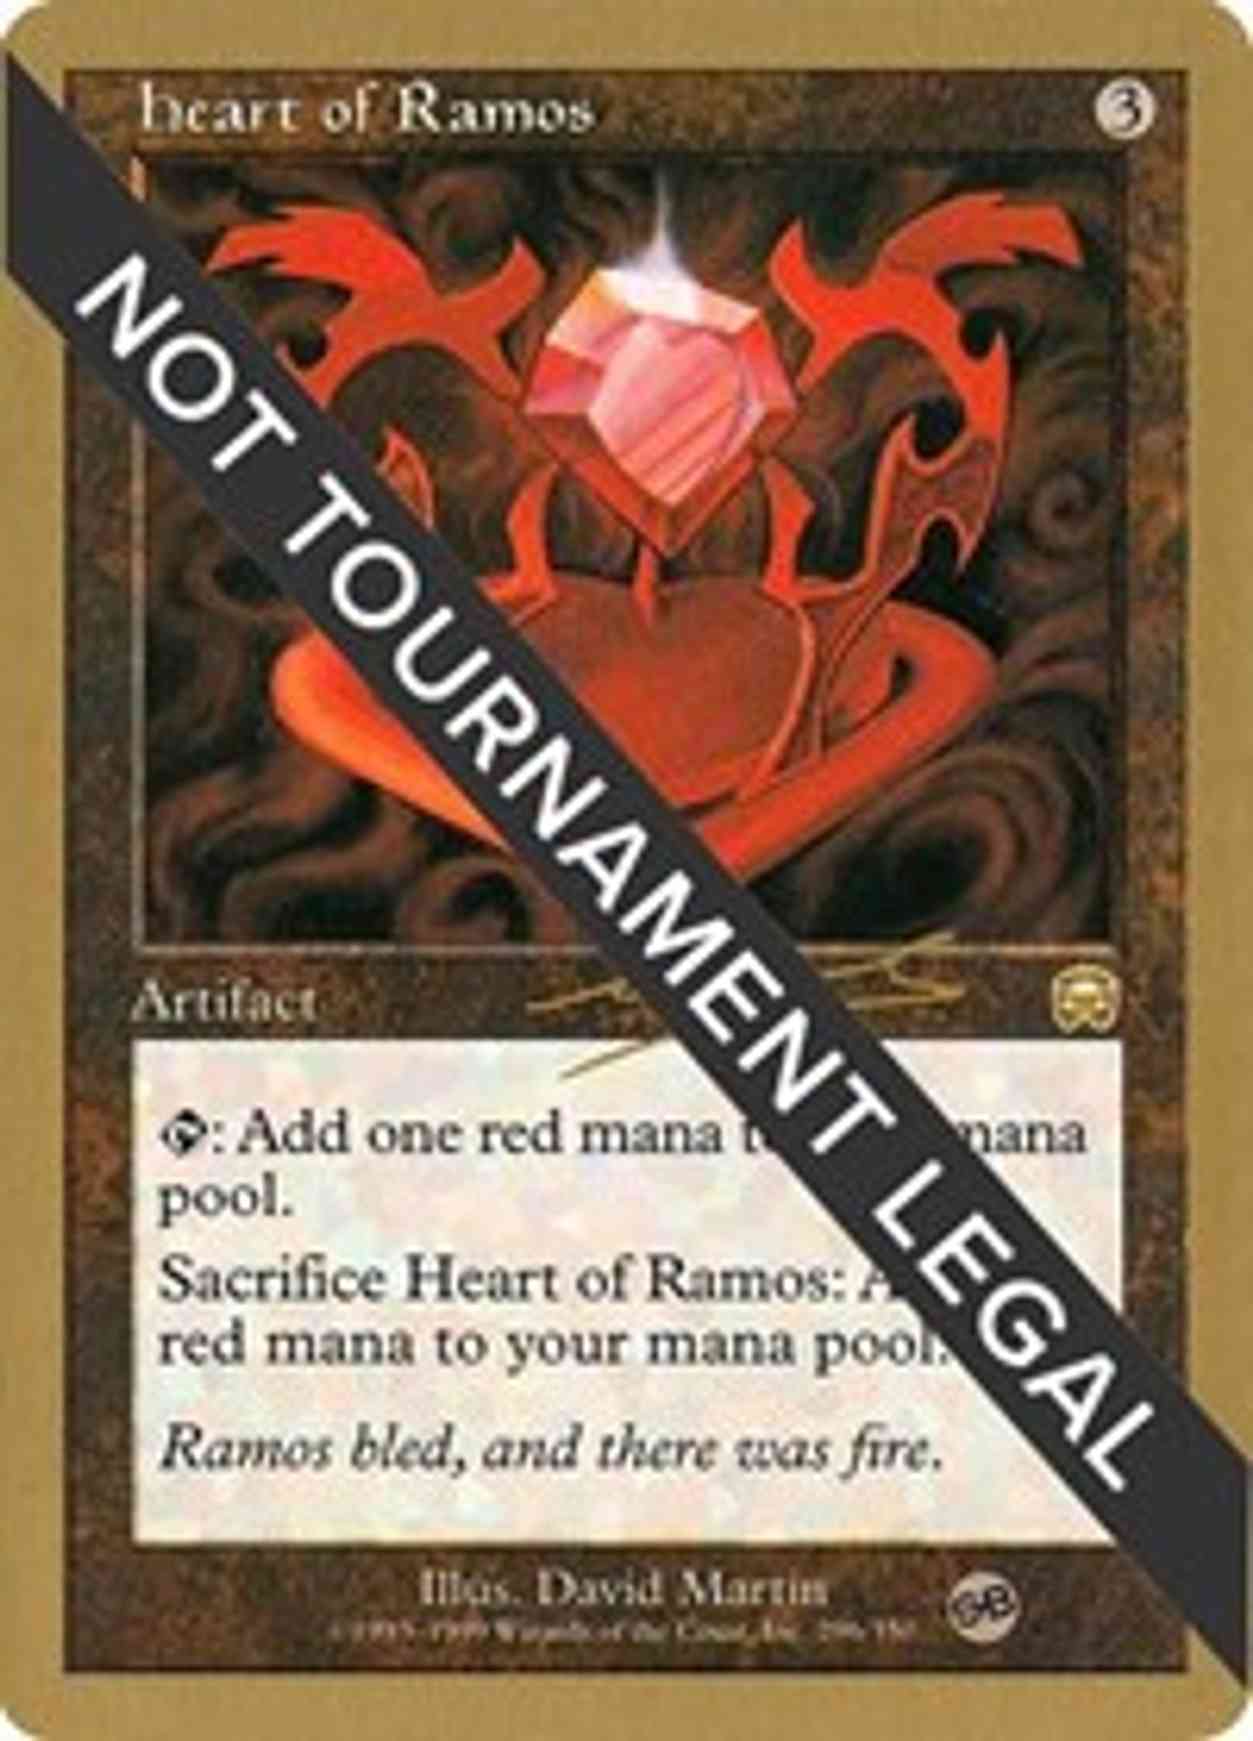 Heart of Ramos - 2000 Nicolas Labarre (MMQ) (SB) magic card front